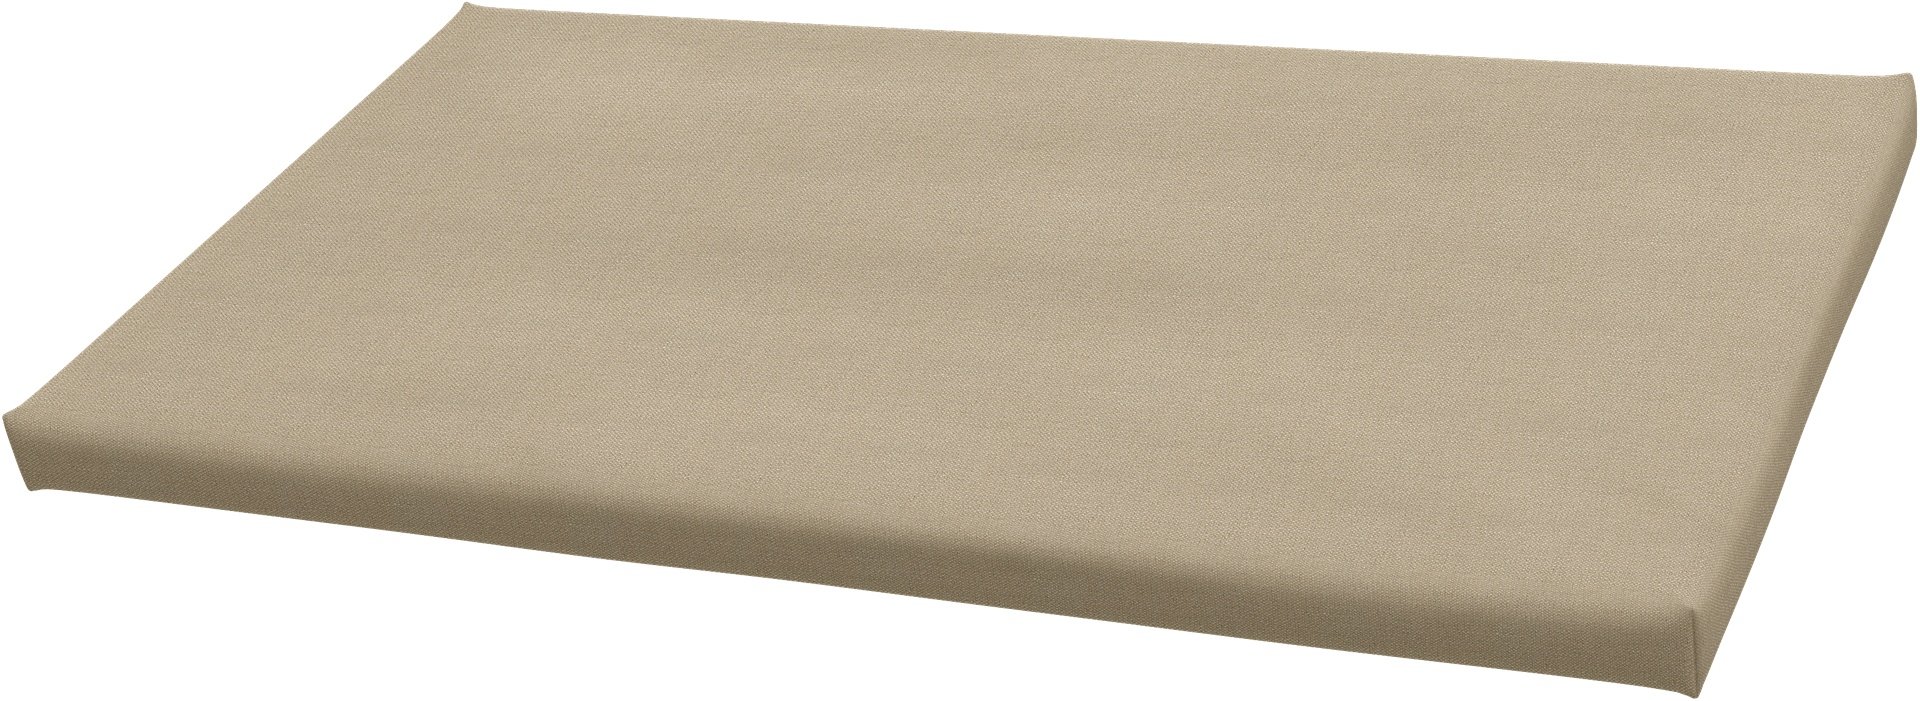 IKEA - Bankkamrat Cushion Cover 90x50x3,5 cm , Tan, Linen - Bemz